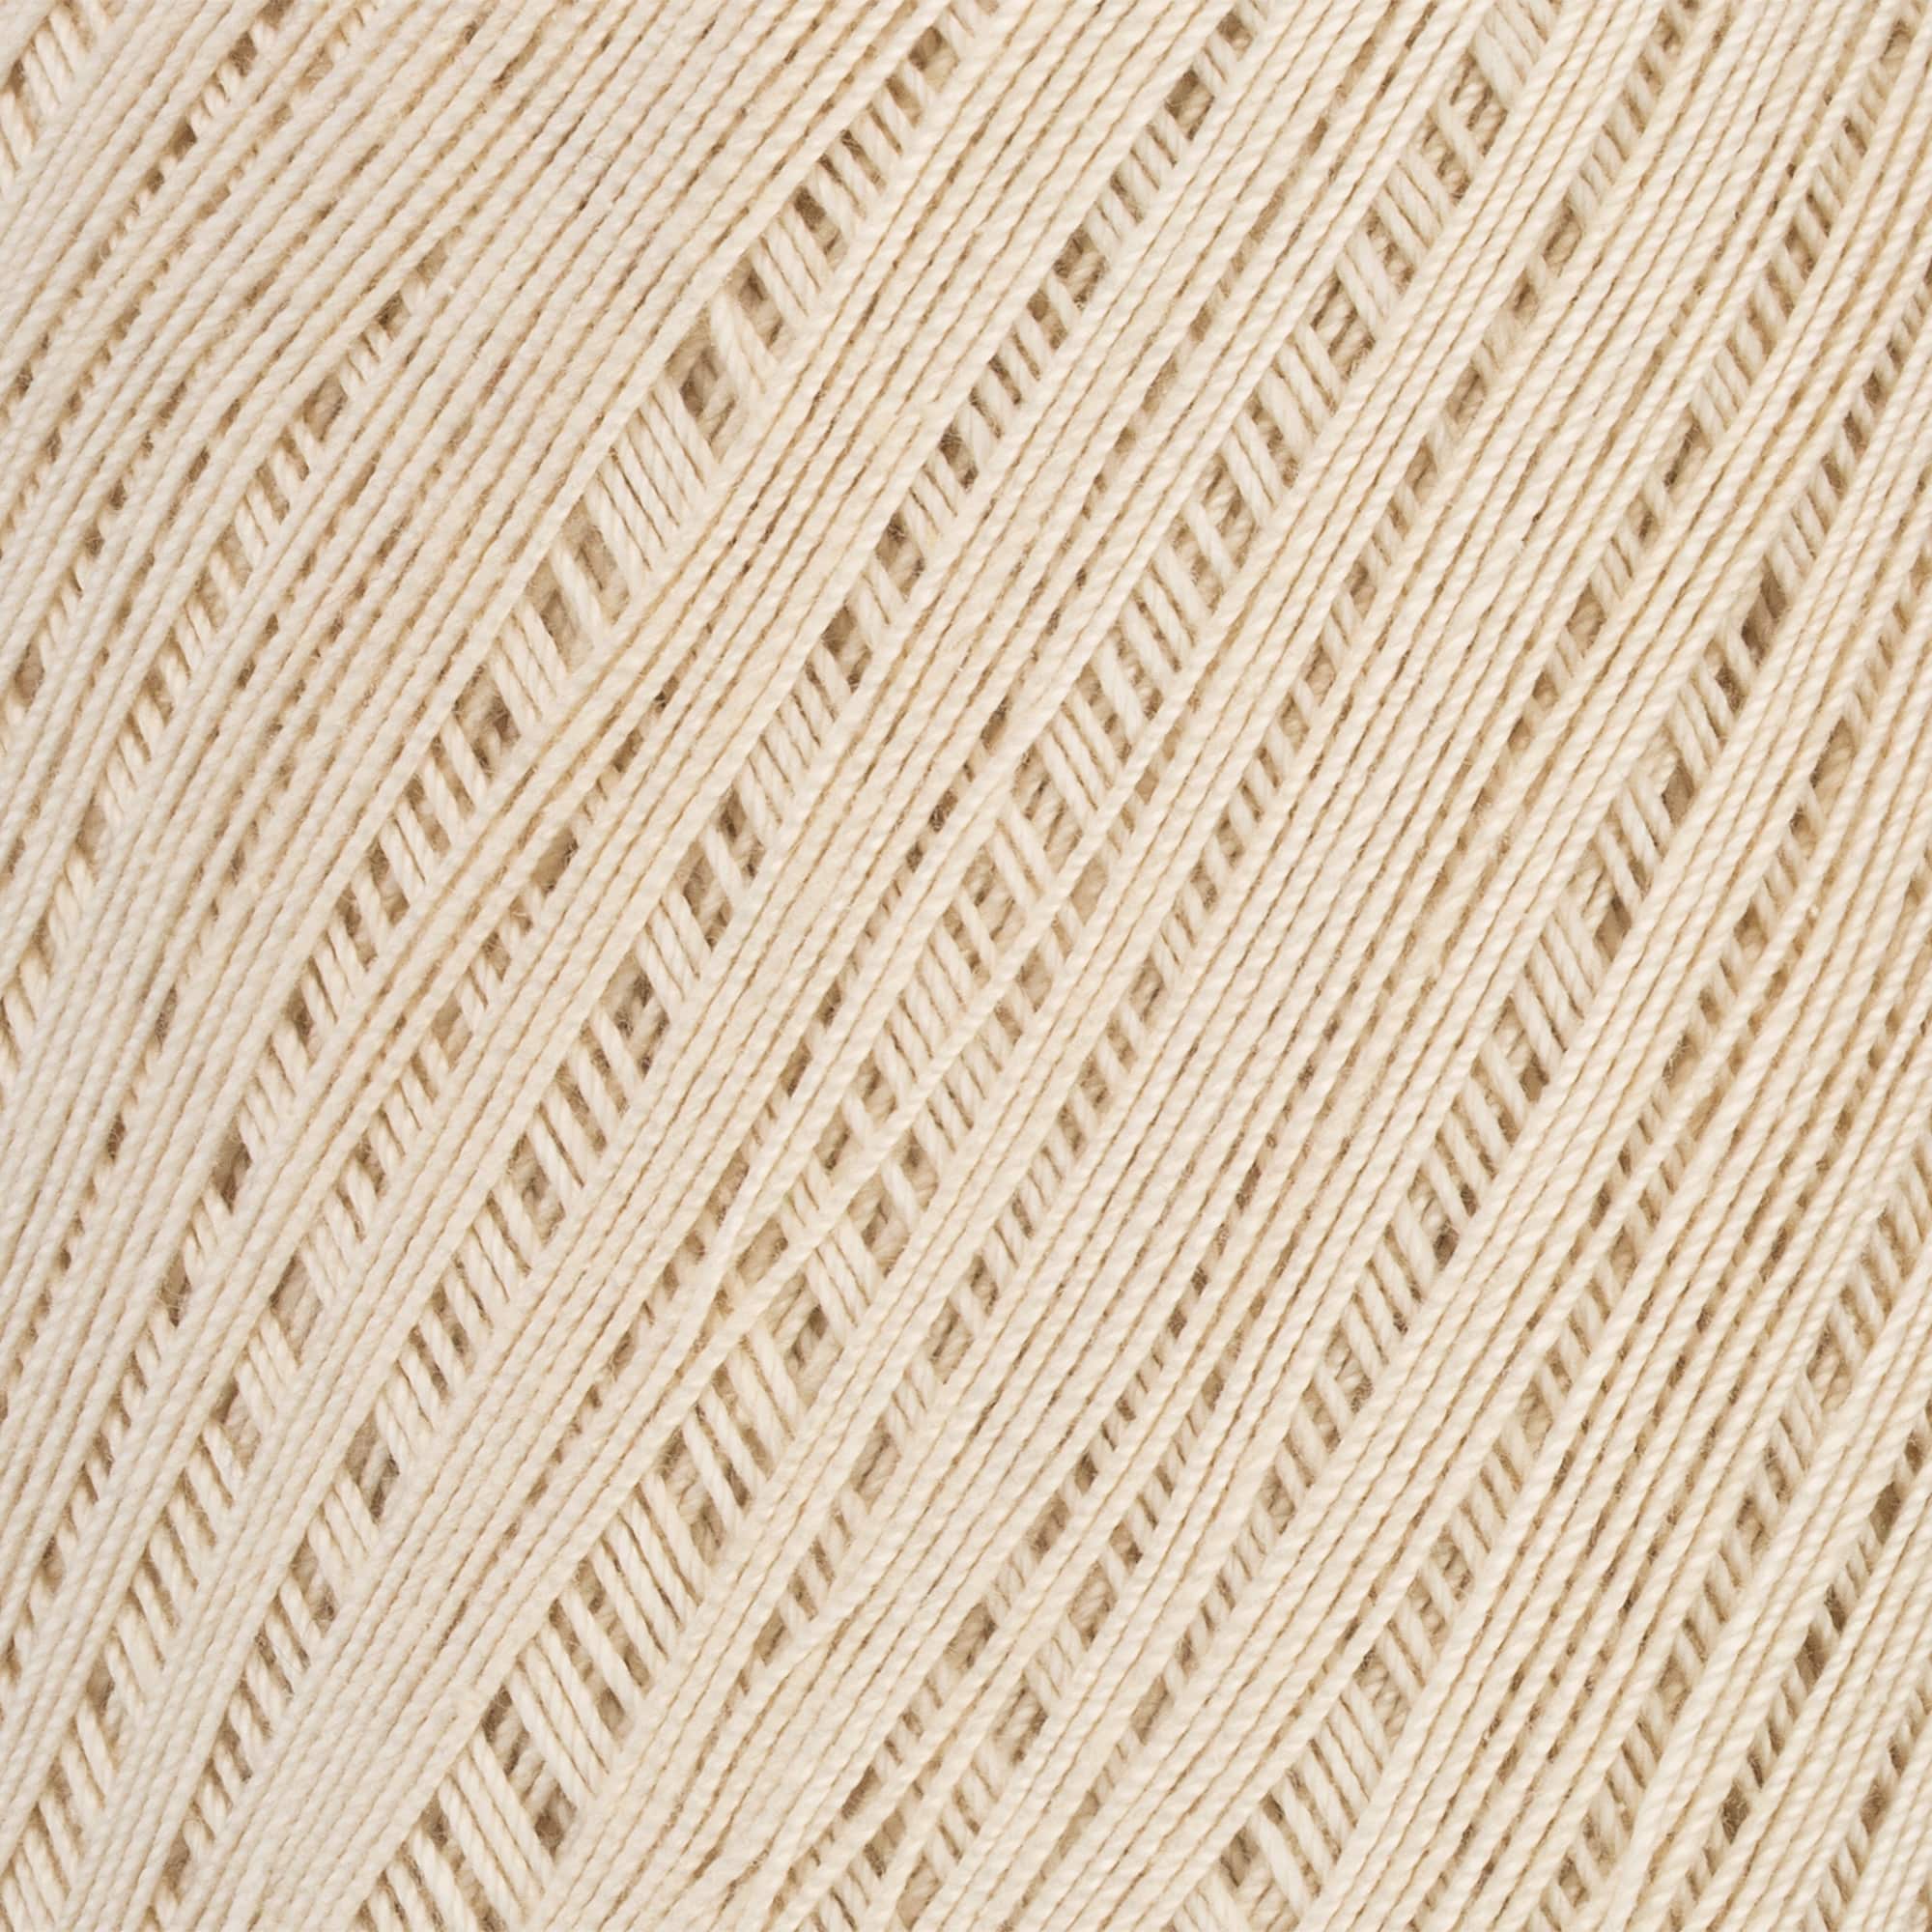 12 Pack: Crochet Thread by Loops &#x26; Threads&#xAE;